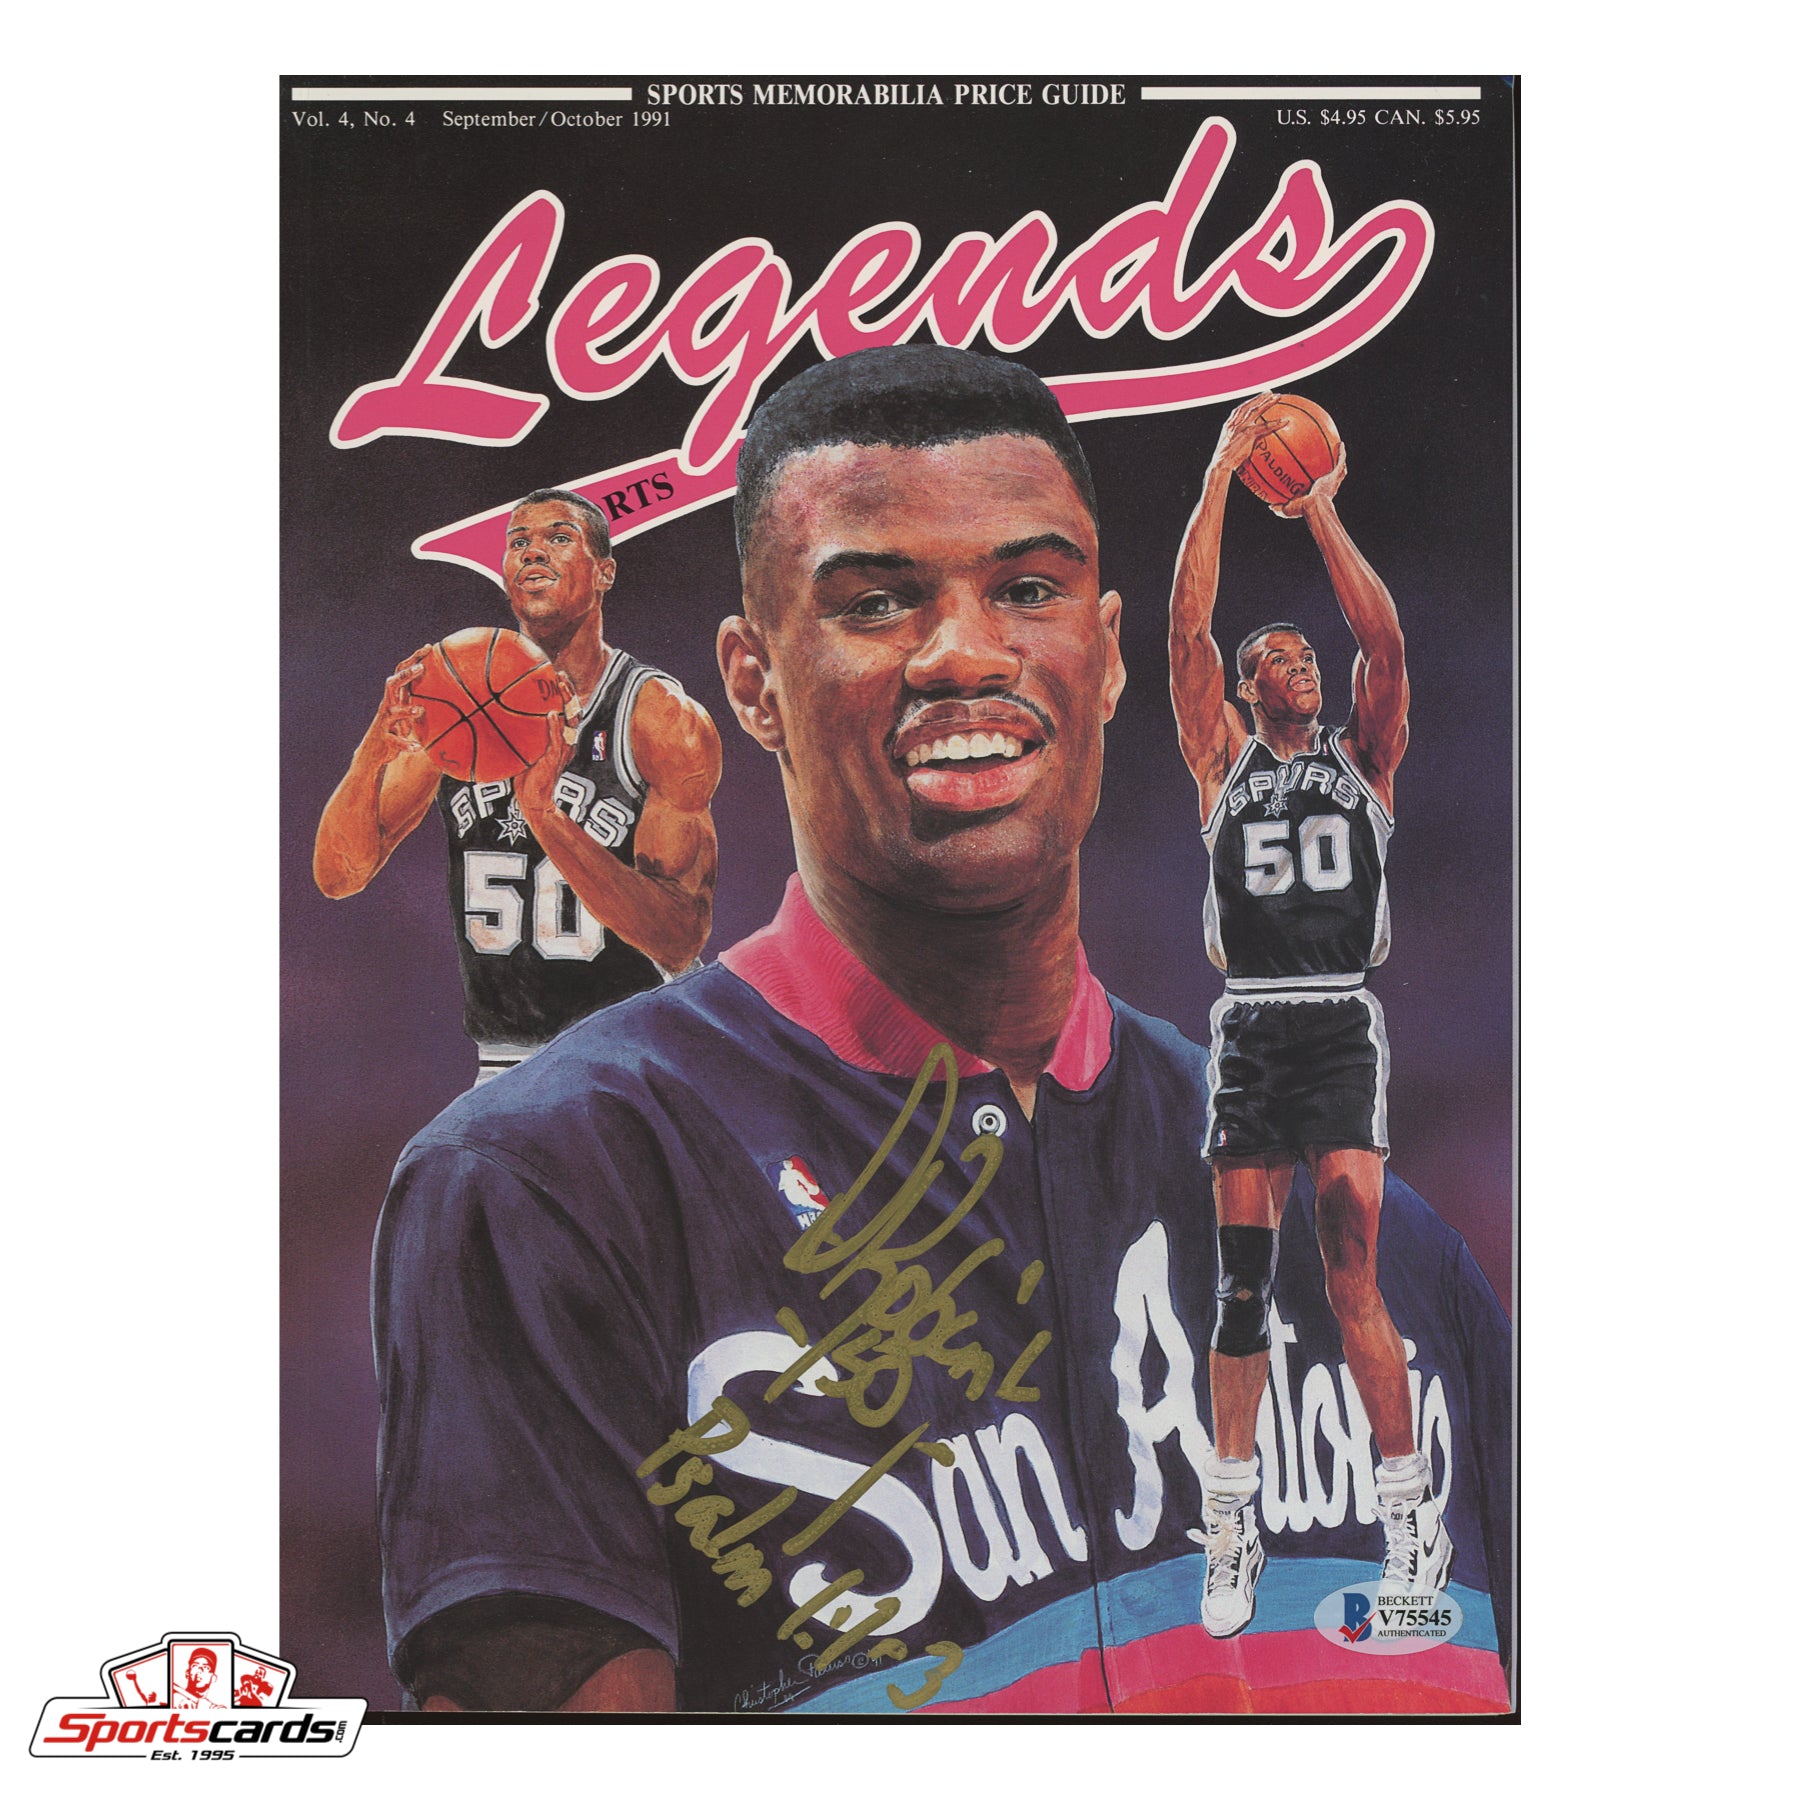 David Robinson Signed 1991 Legends Sports Magazine - BAS COA